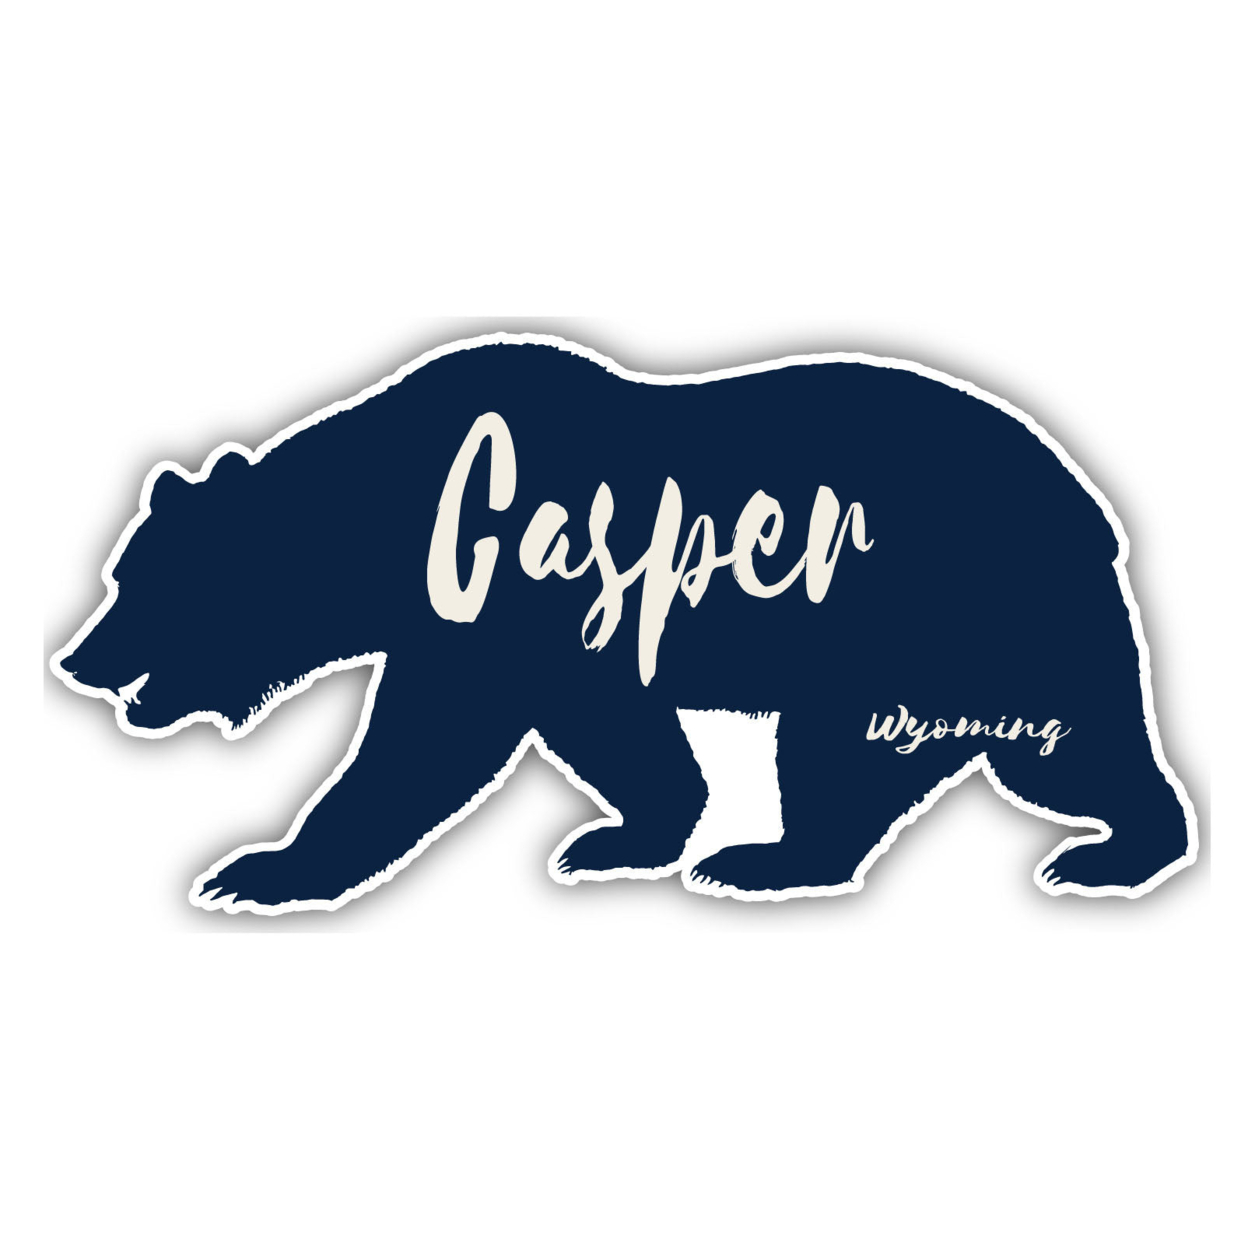 Casper Wyoming Souvenir Decorative Stickers (Choose Theme And Size) - Single Unit, 4-Inch, Bear